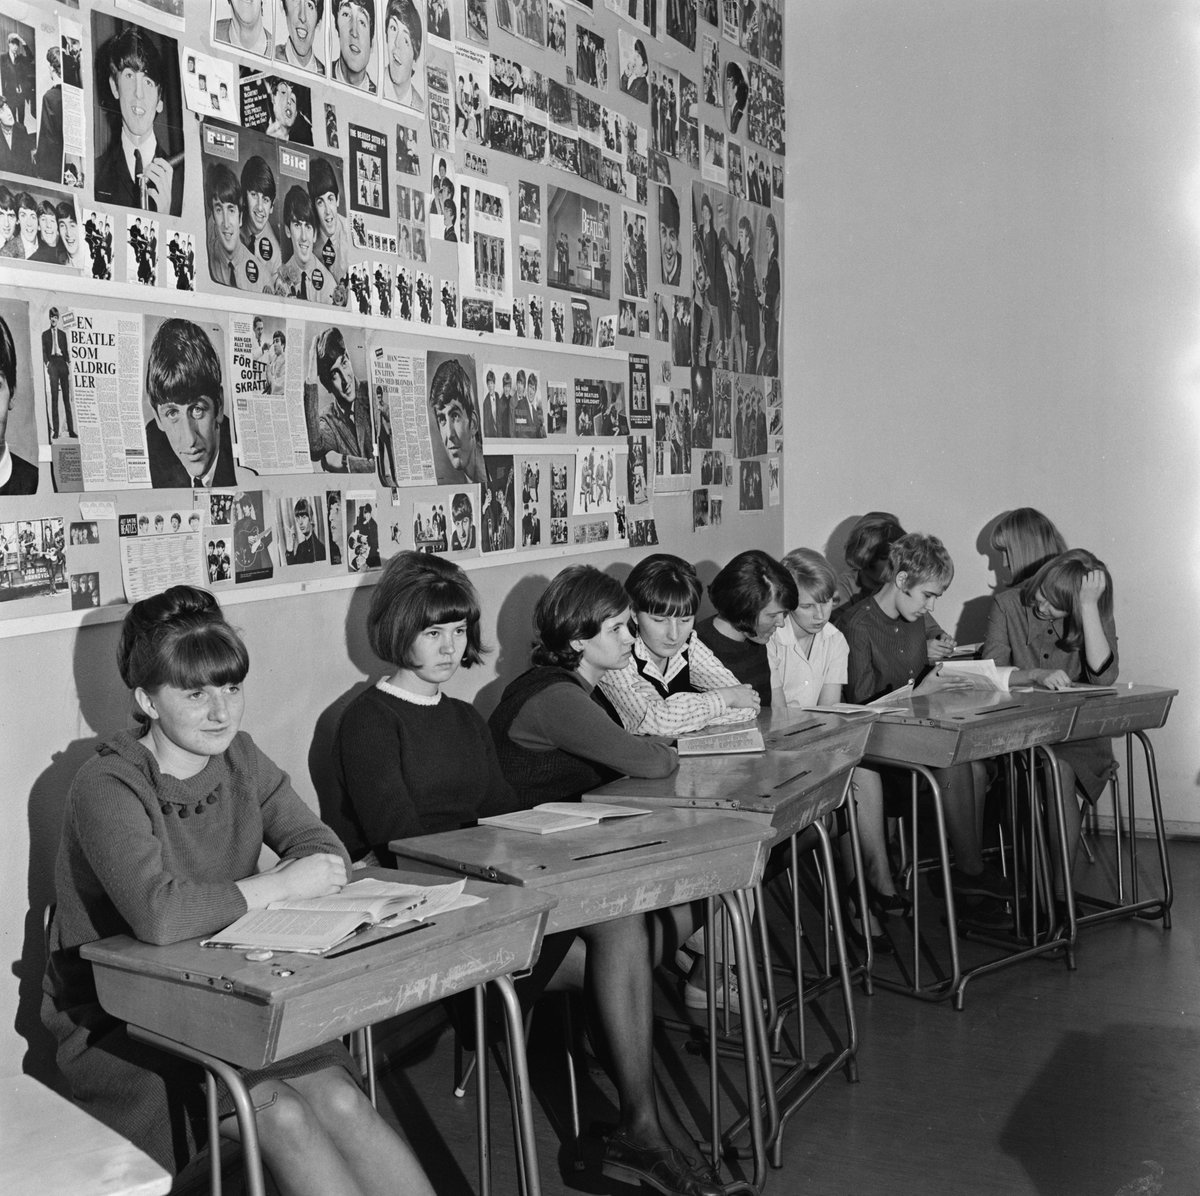 Class room in Helsinki, Finland, April 1964.

#RockAndRoll #TheBeatles https://t.co/AyyH4L3jAh